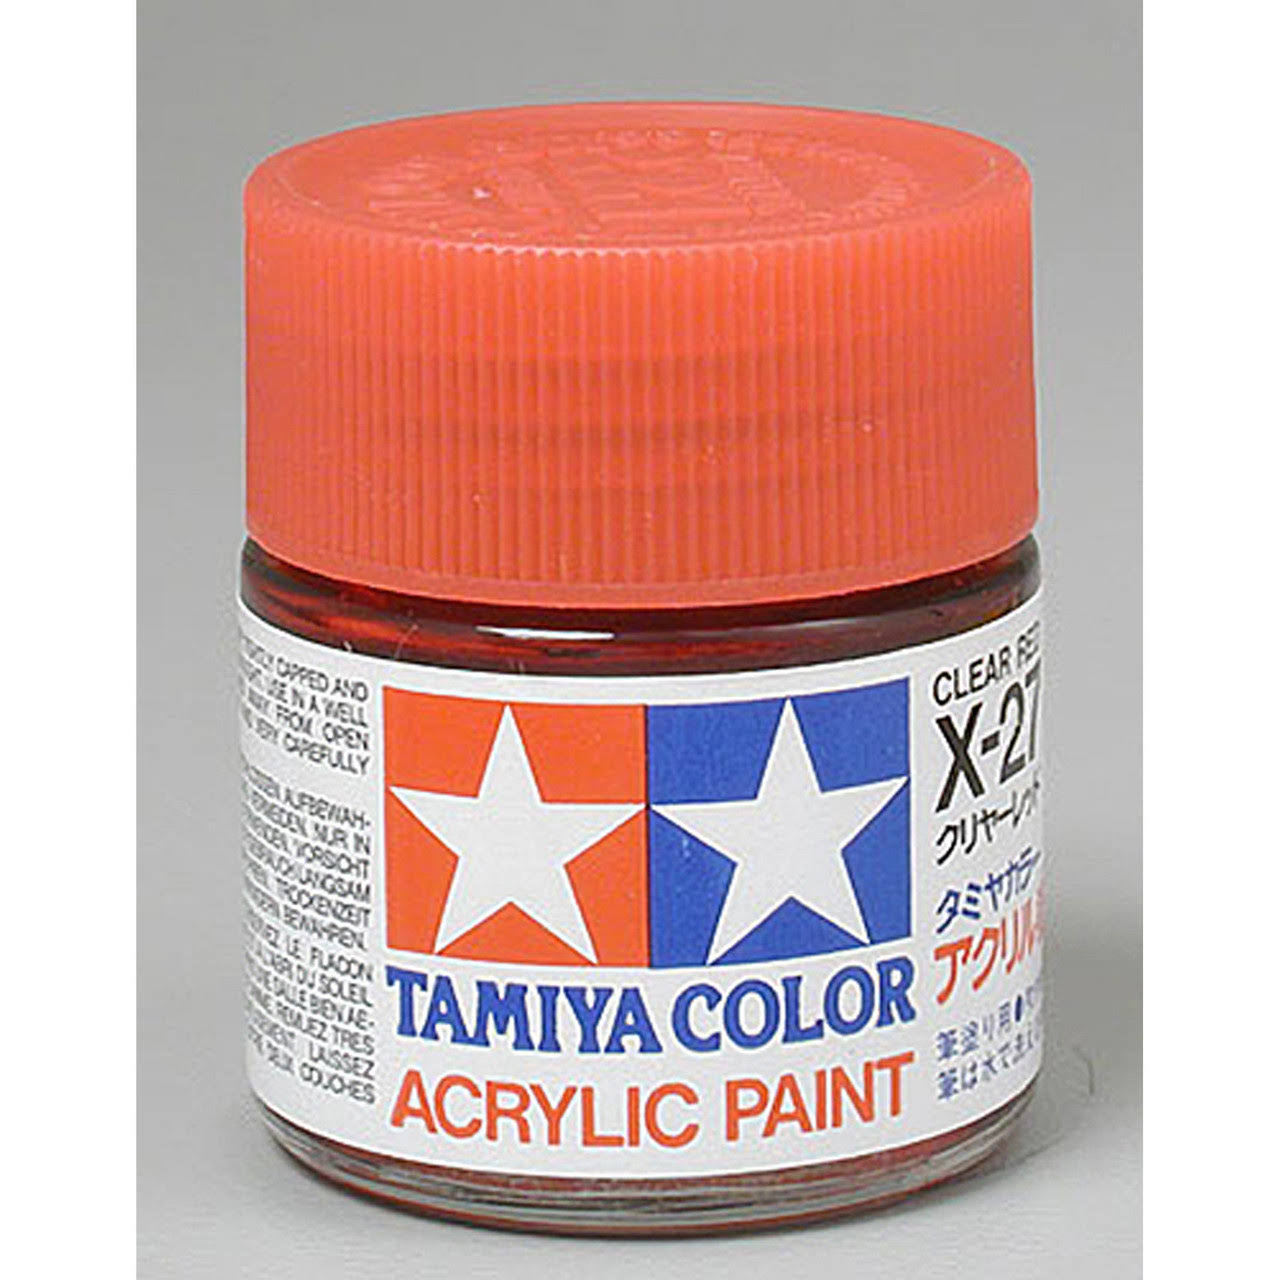 Tamiya Acrylic X27 Gloss, Clear Red TAM81027